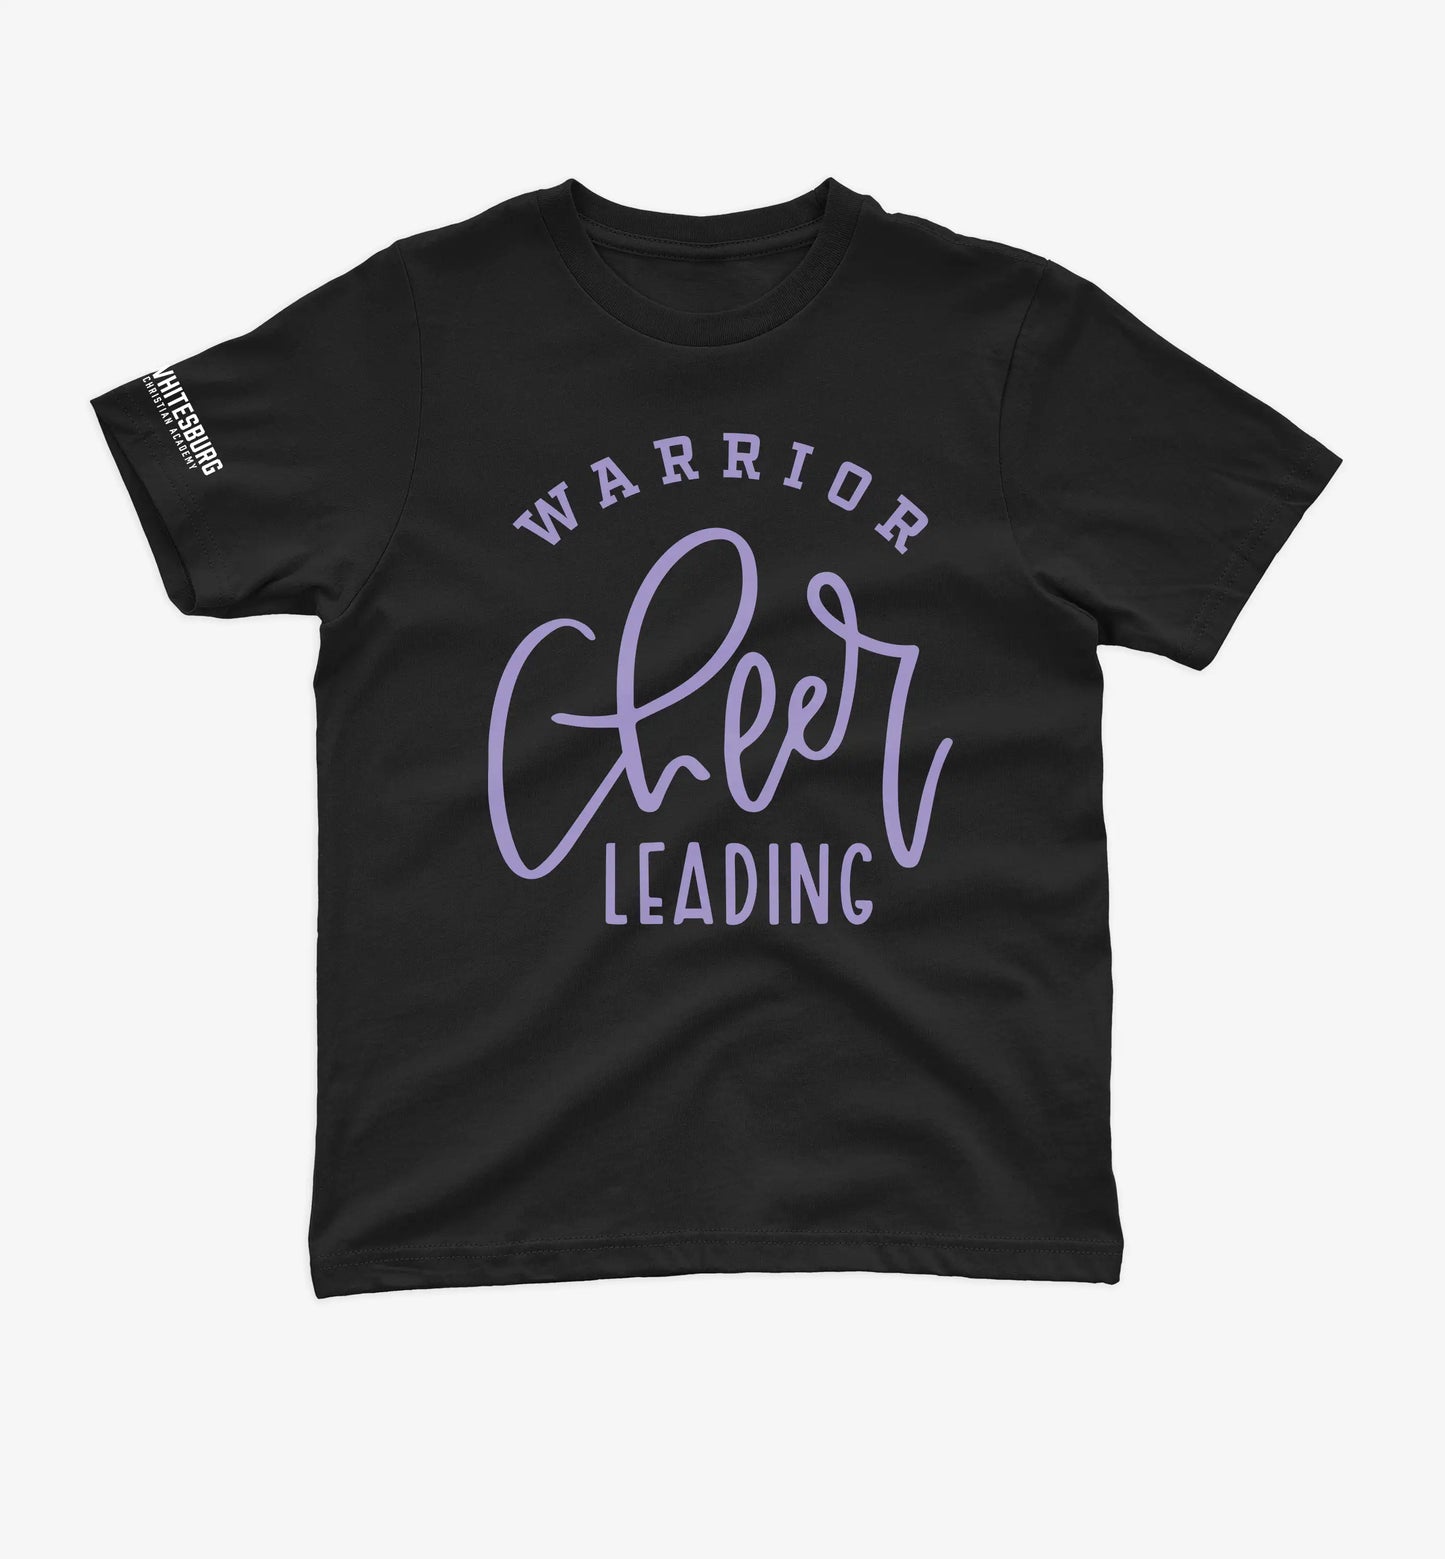 YOUTH CHEER - Warriors Tshirt